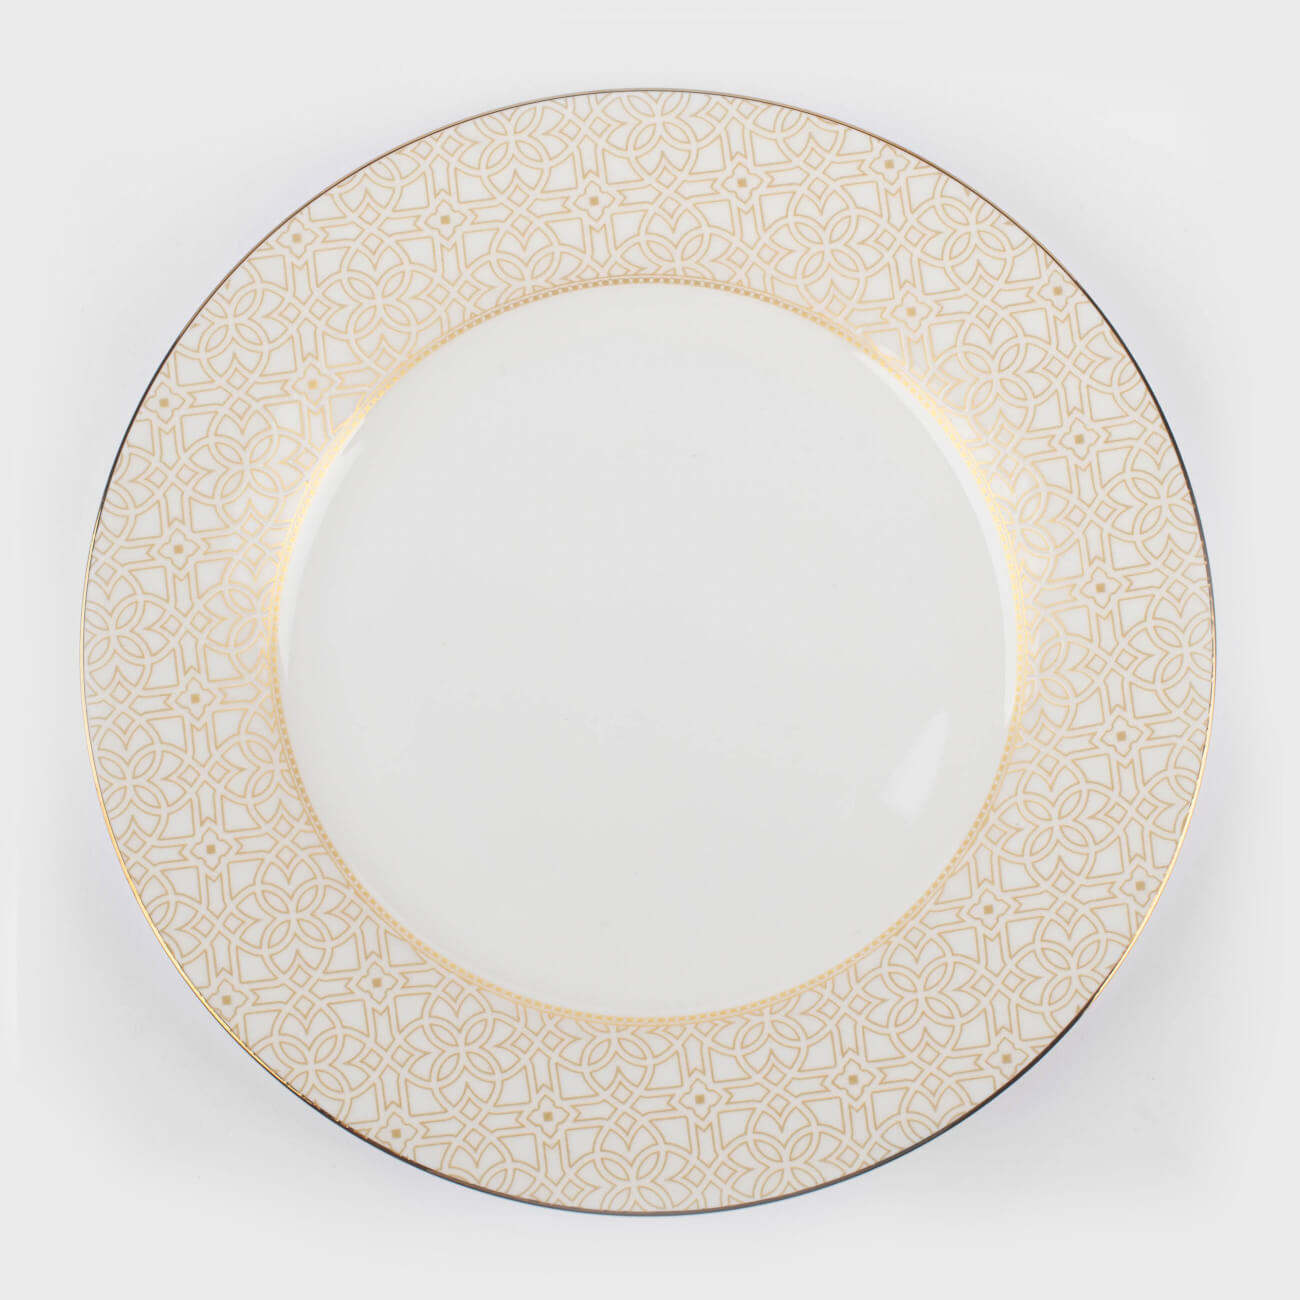 Тарелка десертная, 19 см, фарфор F, с золотистым кантом, Орнамент, Liberty тарелка десертная noritake монтвейл 16 5 см